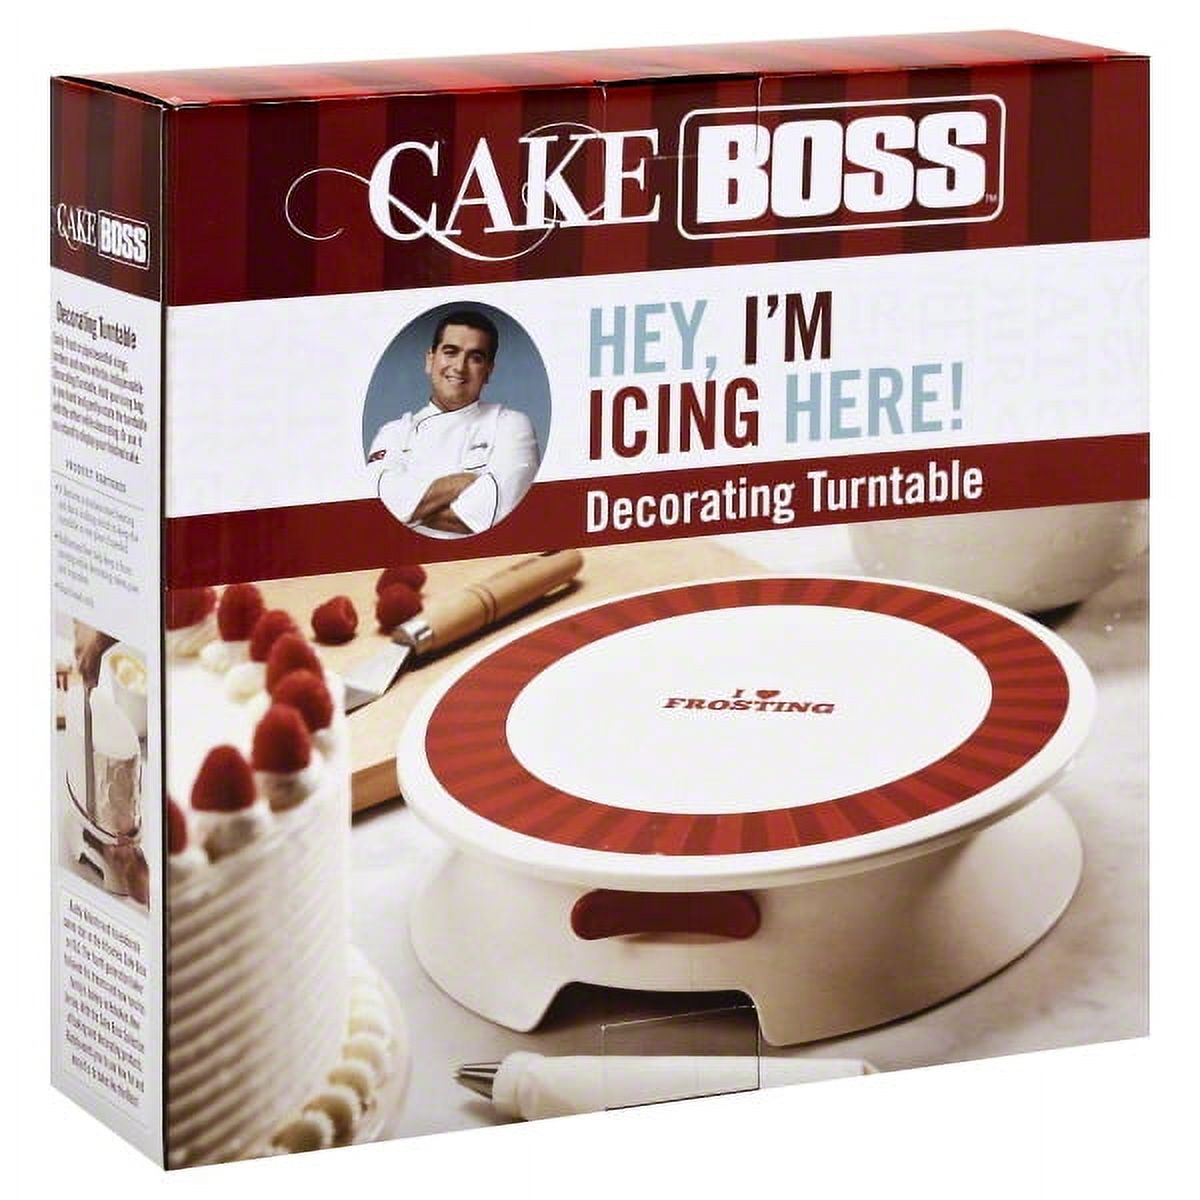 Cake Boss Decorating Tools Cake Decorating Turntable - image 1 of 4